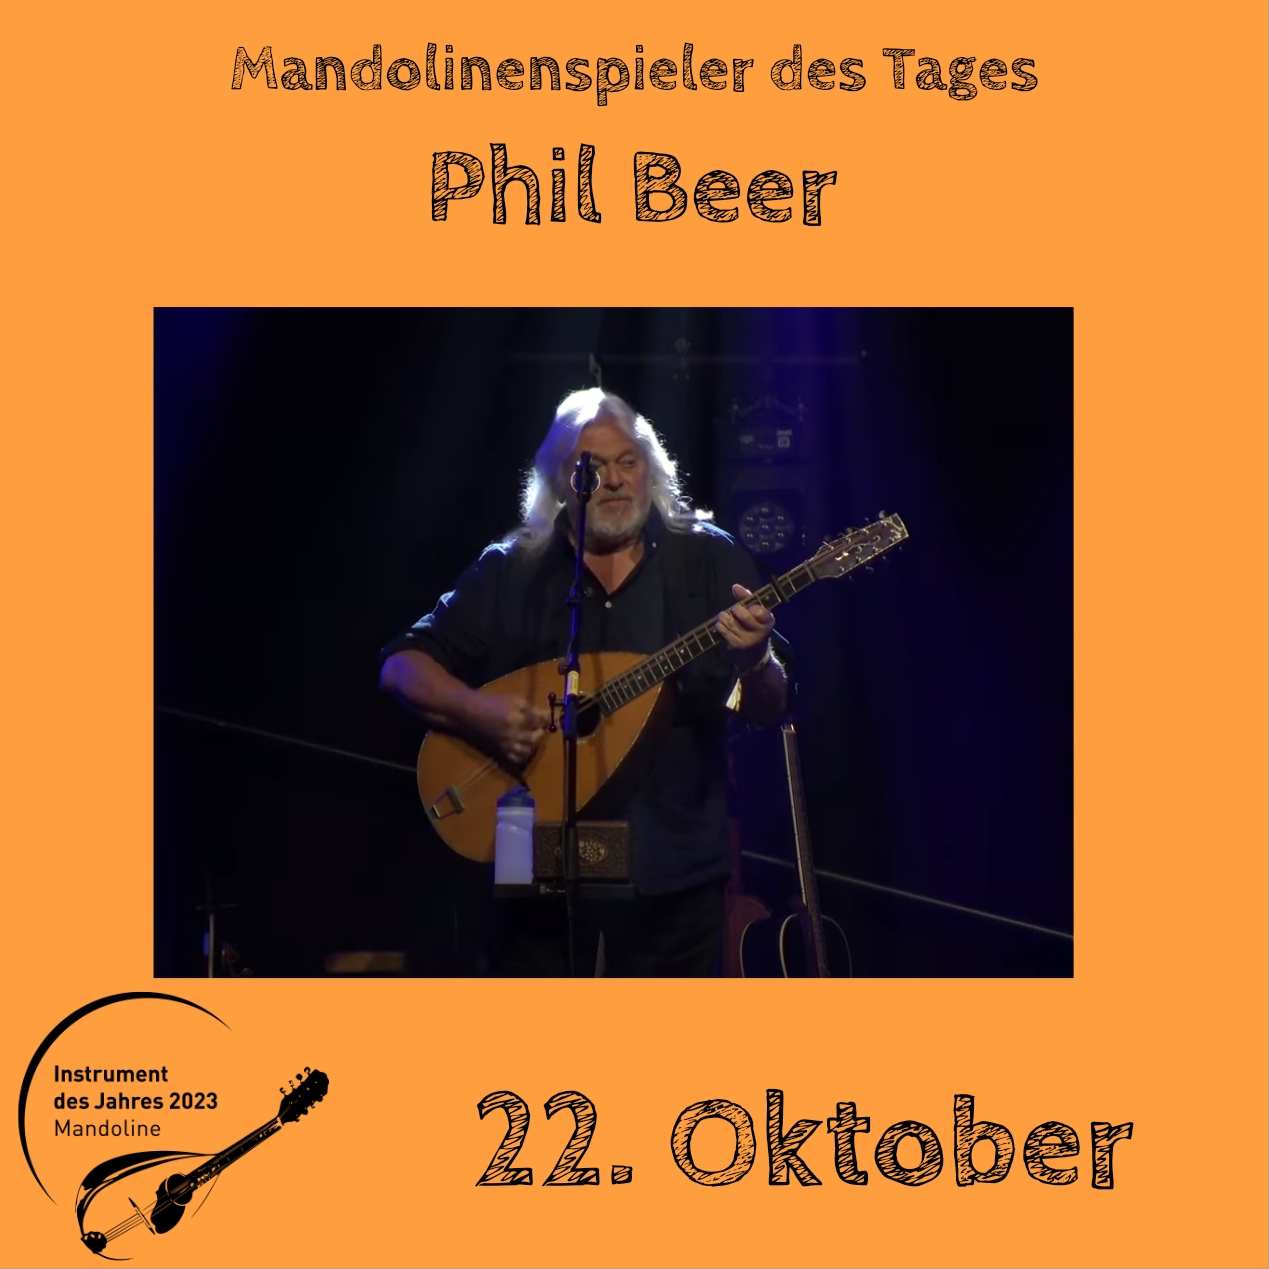 22. Oktober - Phil Beer Instrument des Jahres 2023 Mandolinenspieler Mandolinenspielerin des Tages